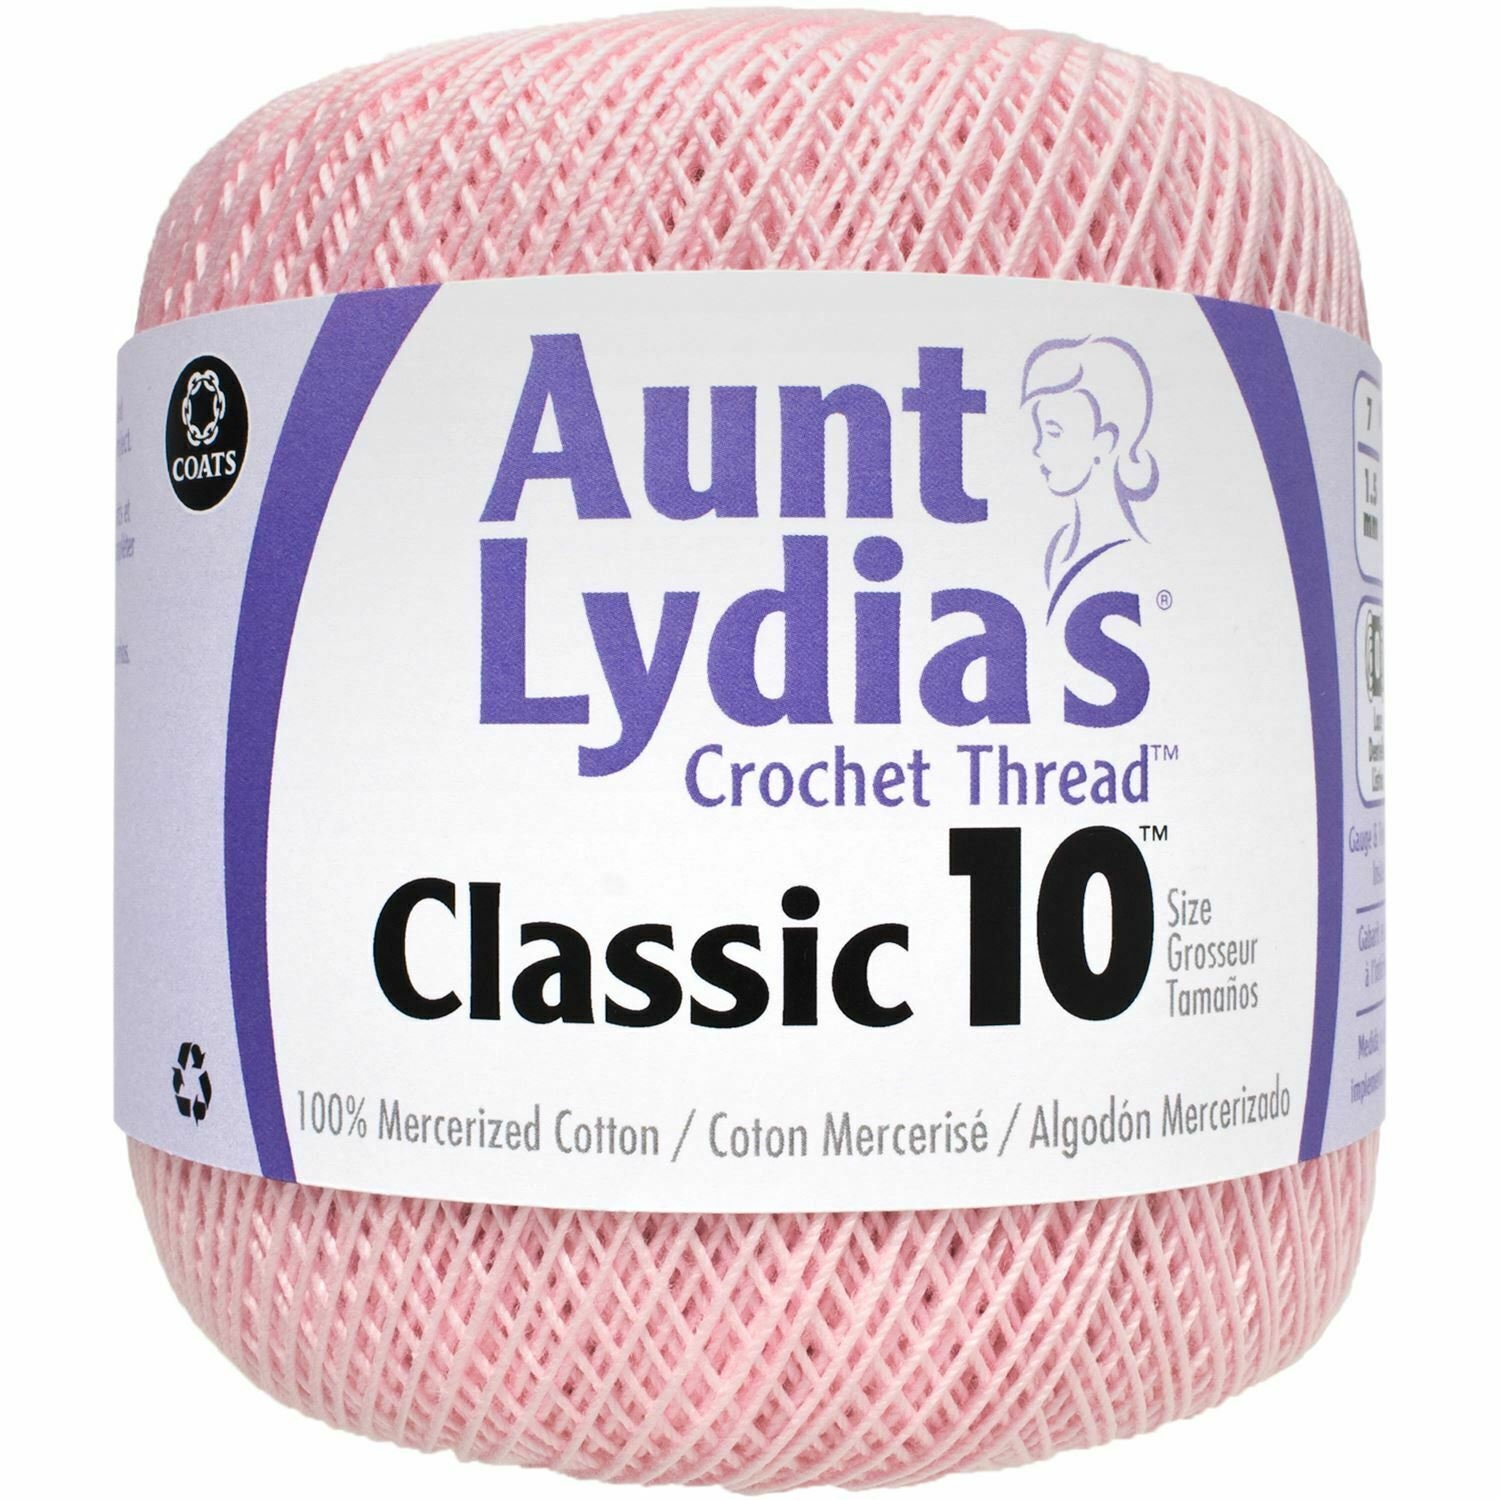 South Maid Crochet Thread Size 10, Soft Yellow